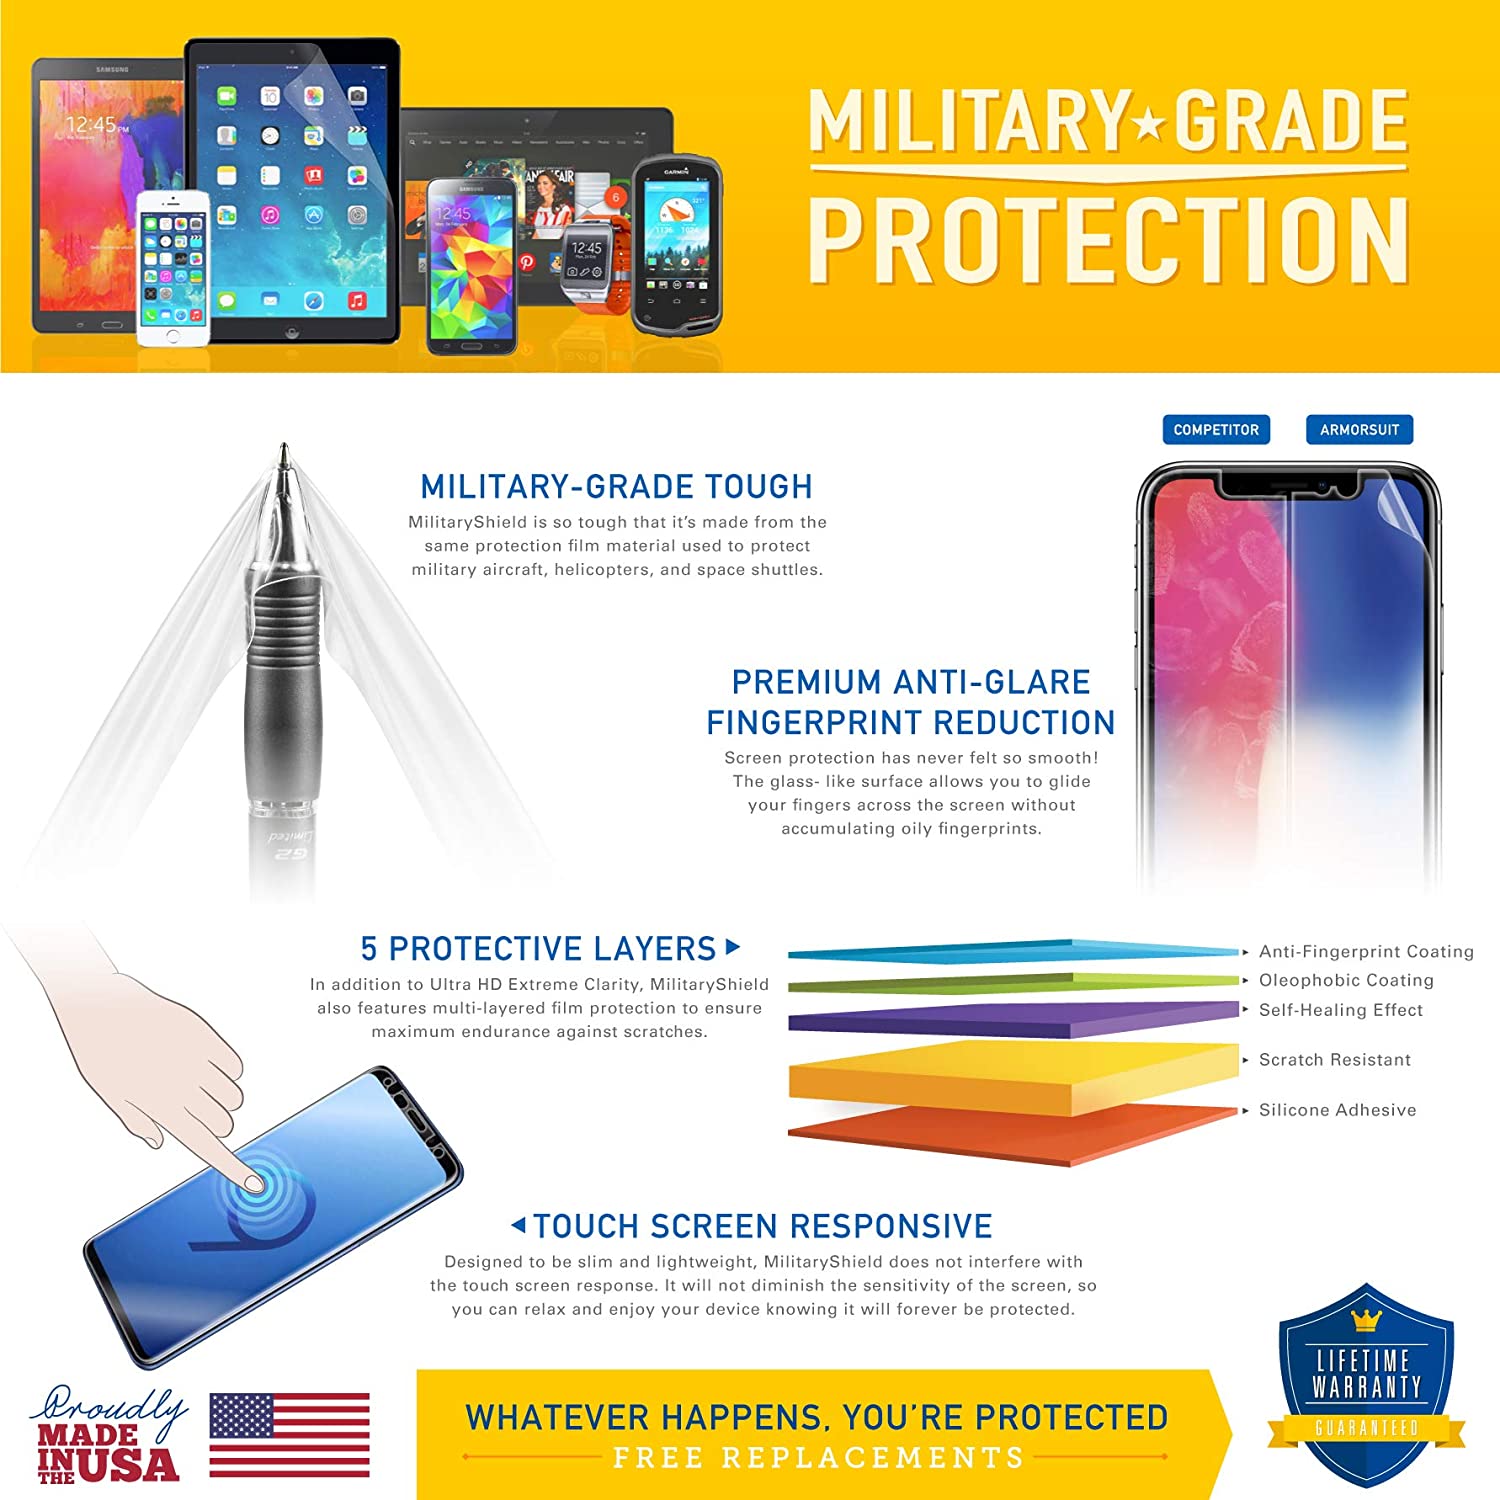 Samsung Galaxy S2 SkyRocket Full Body Skin Protector